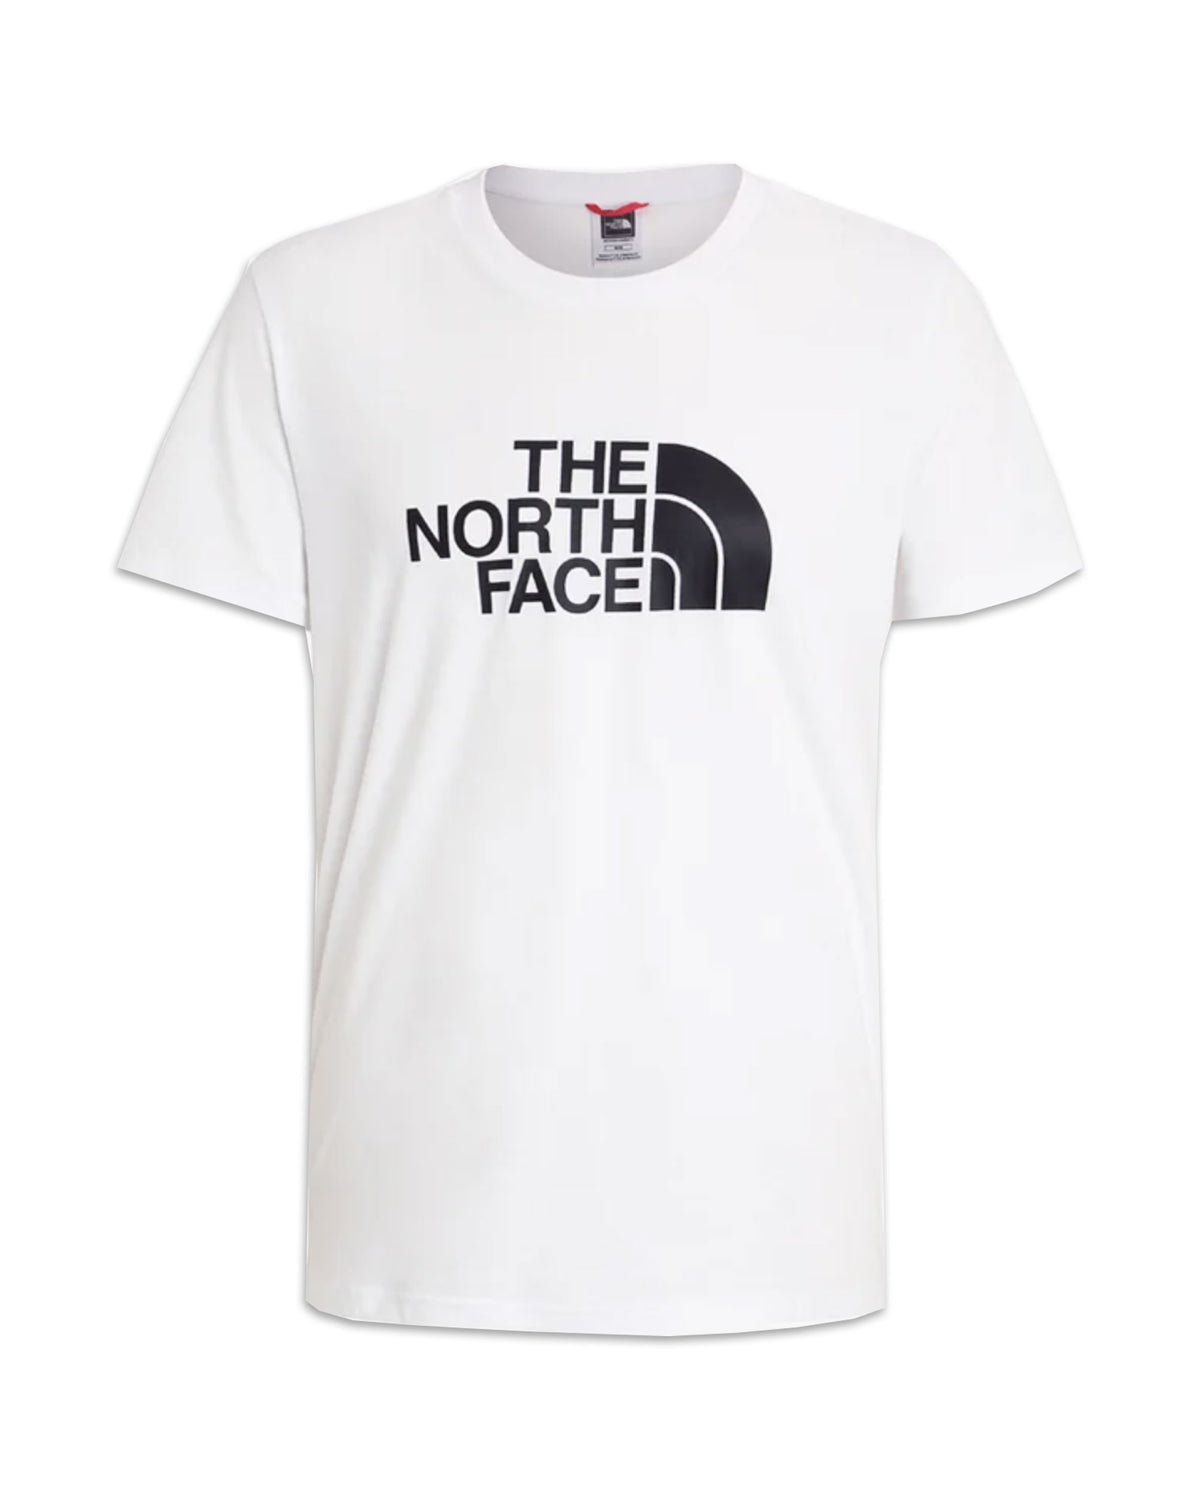 T-Shirt Uomo The North Face Big Logo Bianco